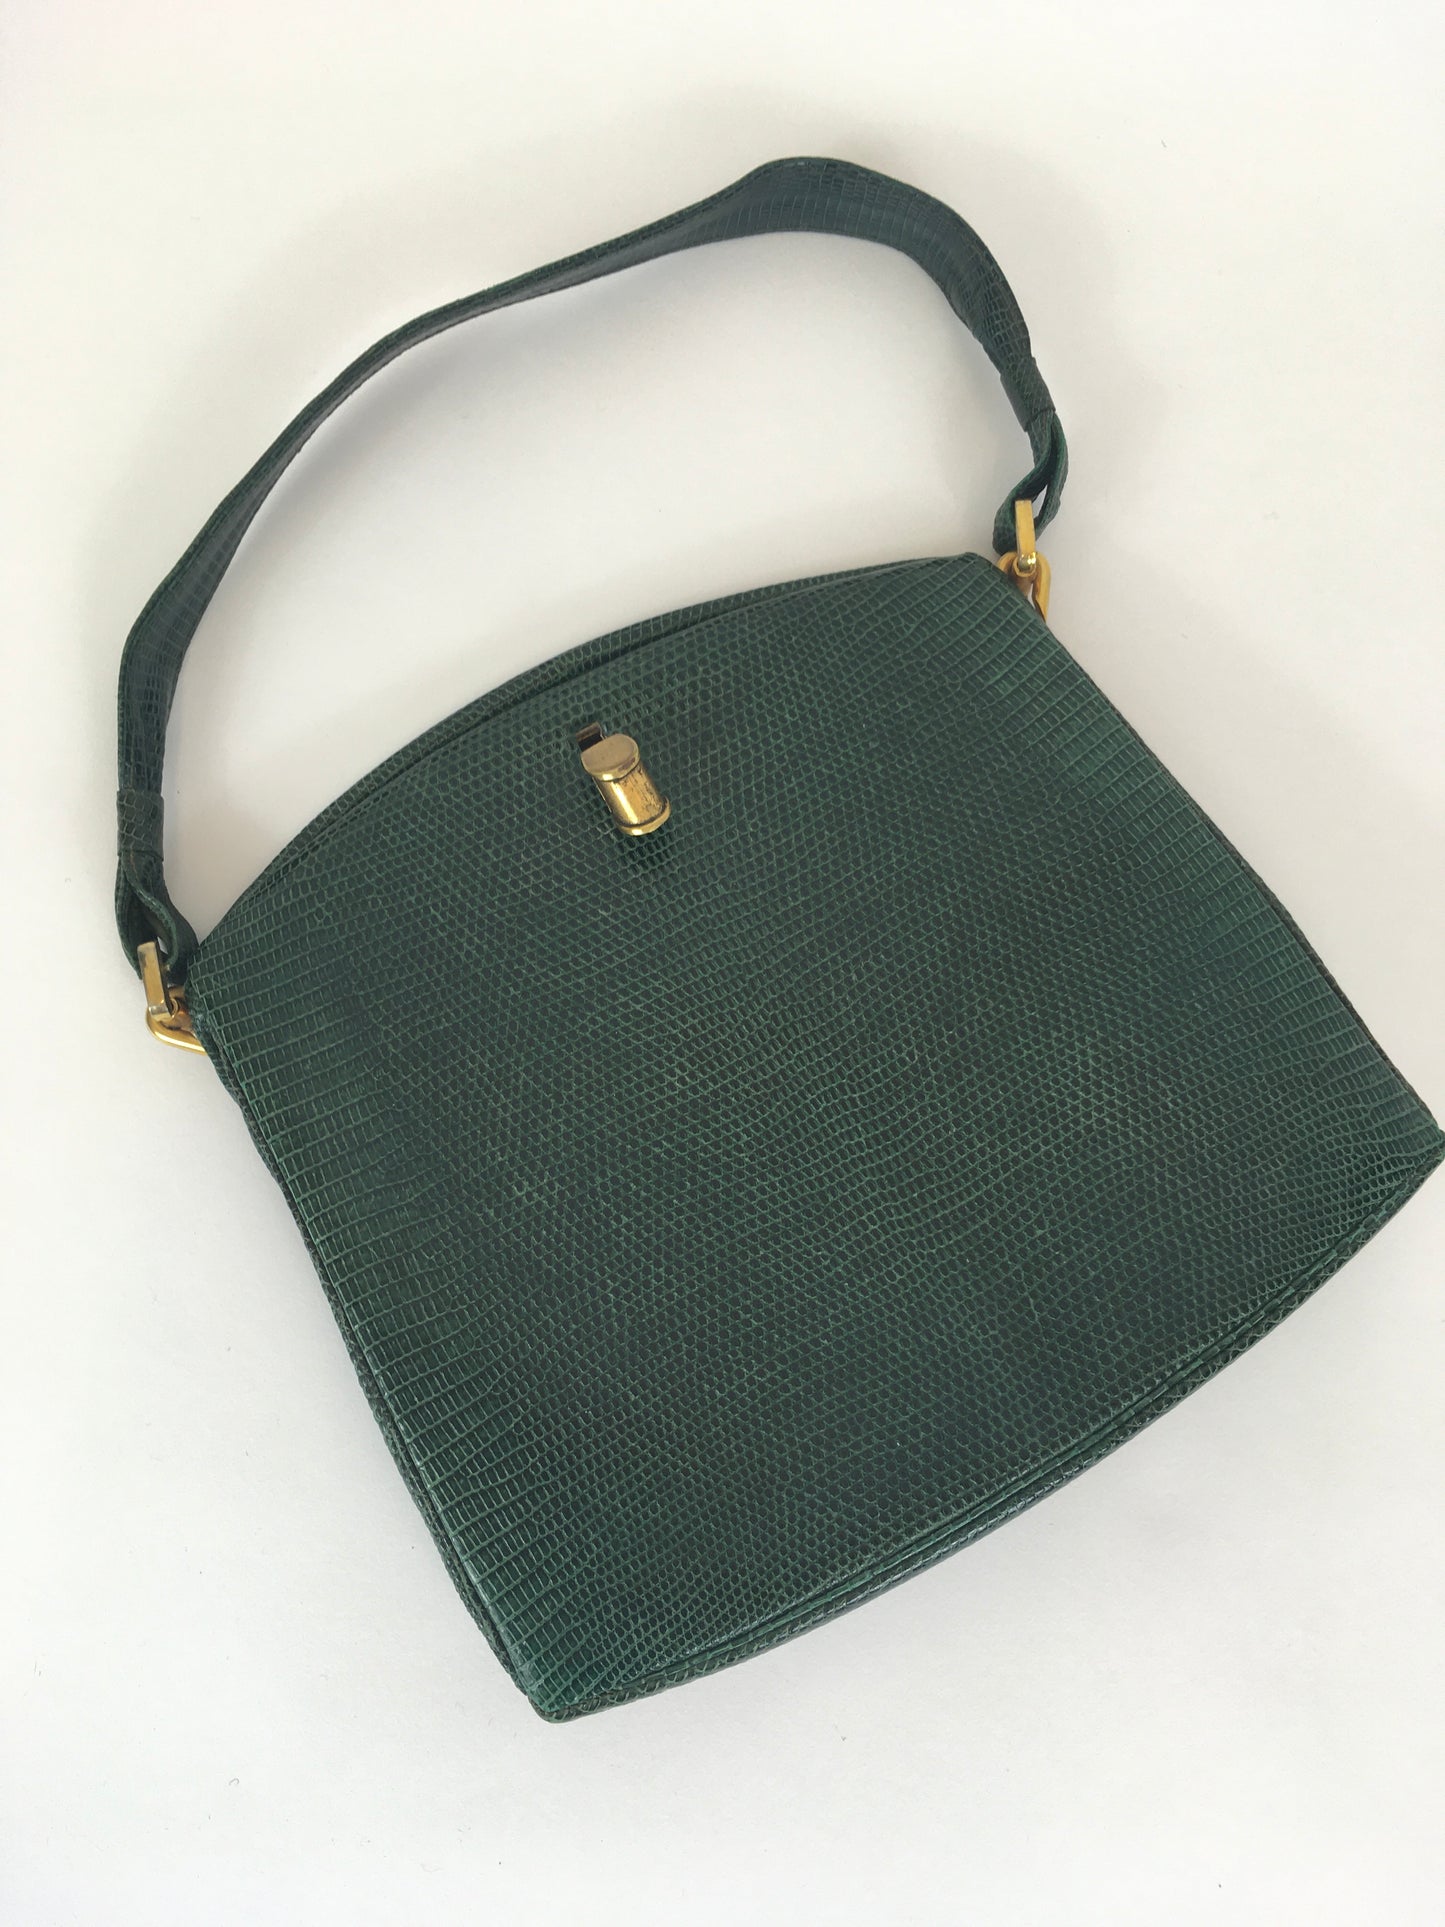 Original 1930’s Green Skin Handbag - In A Fabulous Art Deco Shape